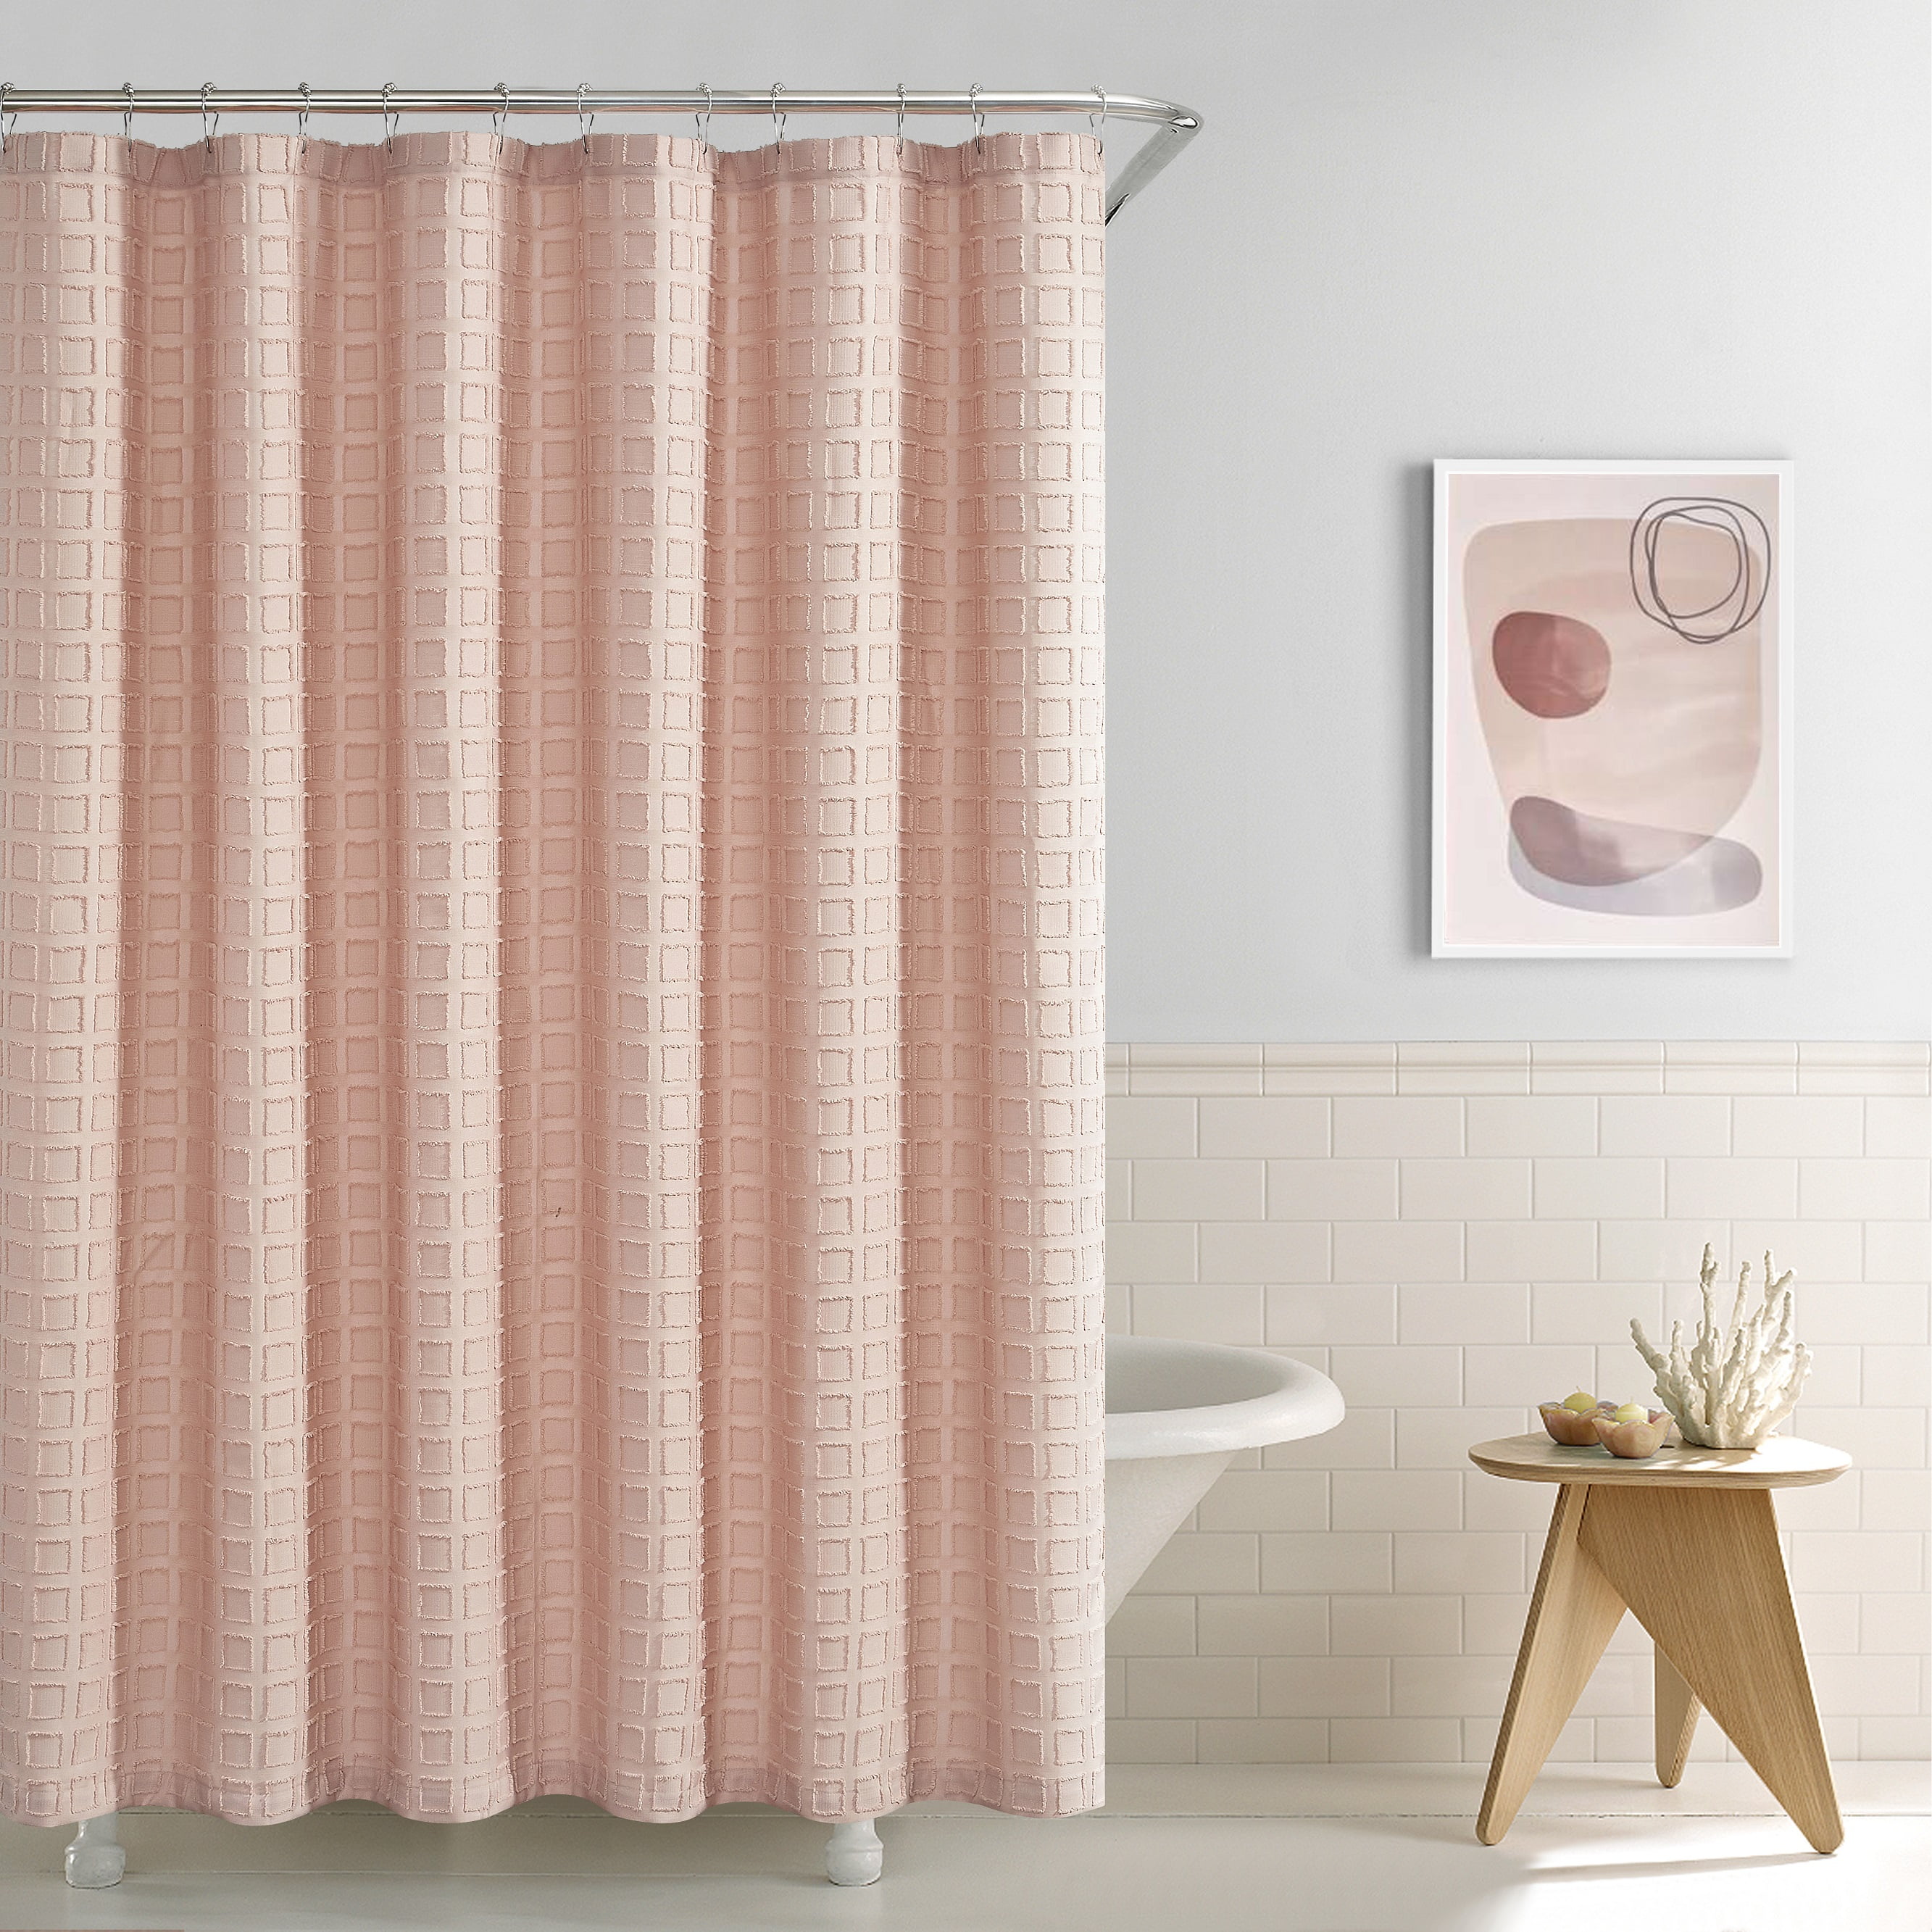 Cherry Tree Blossom INTERESTPRINT Novelty Shower Curtain Bathroom Sets Funny Fabric Home Bath Decor 84 X 69 Inches